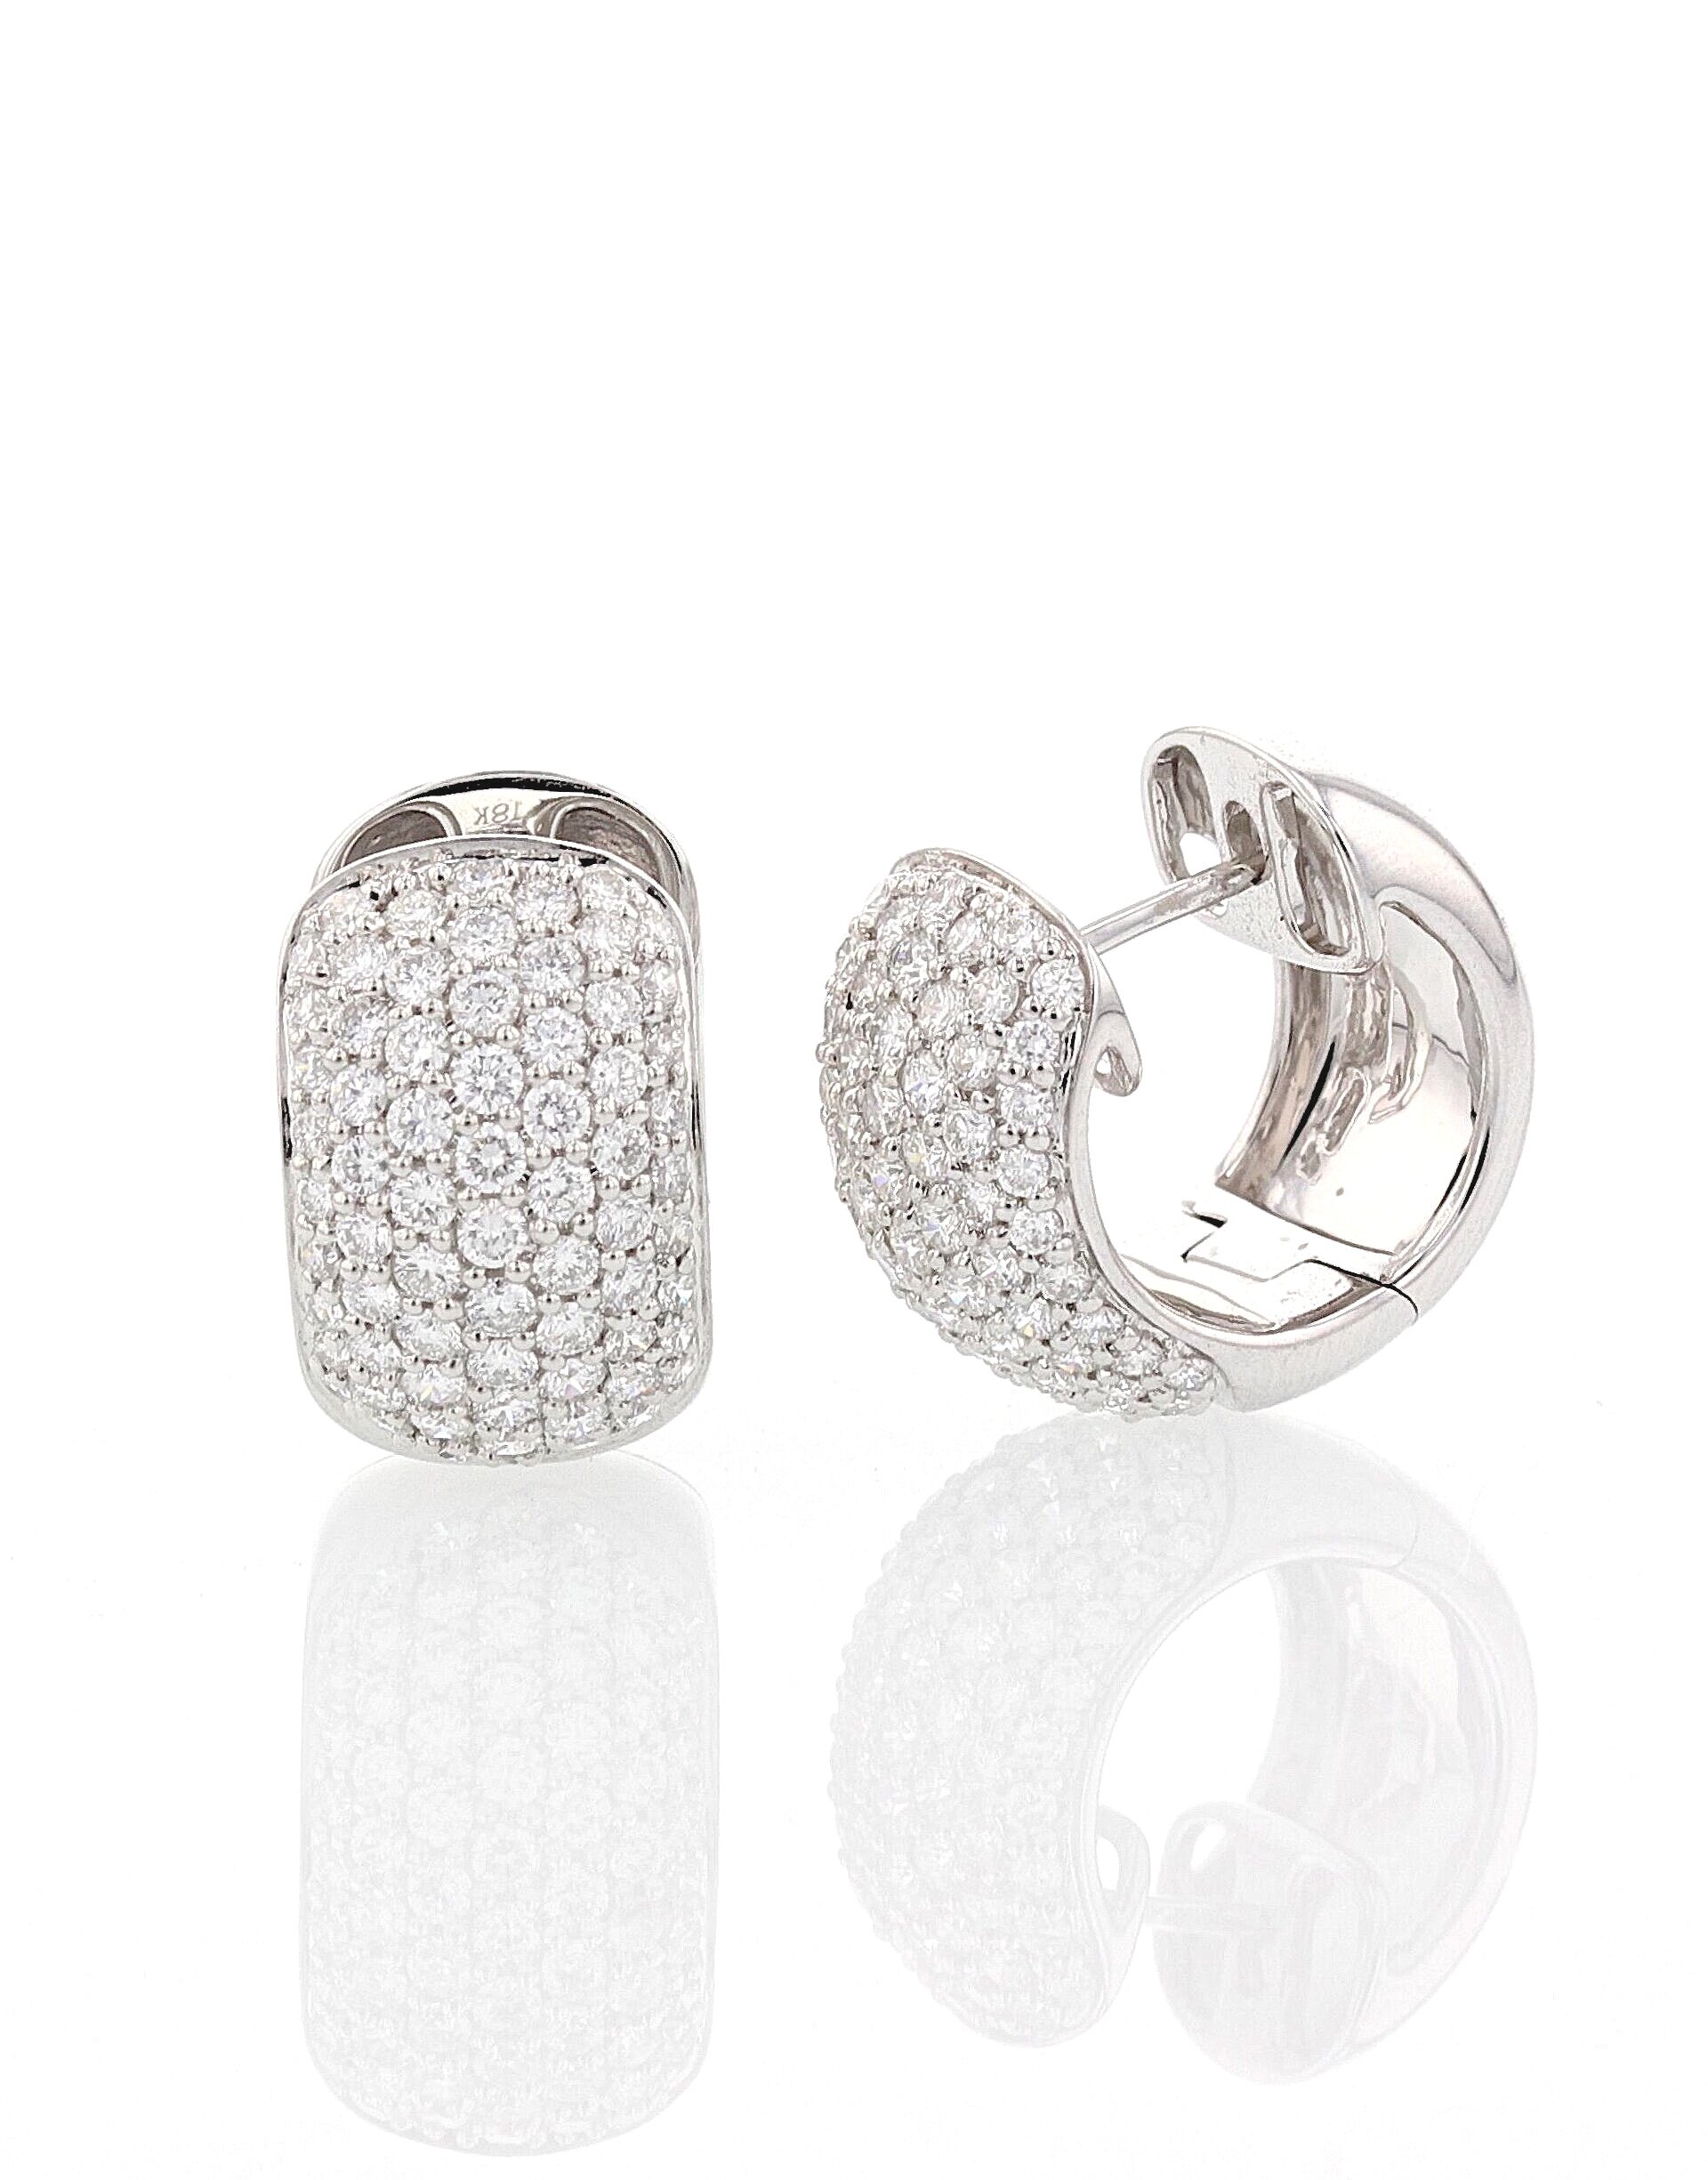 18K white gold Diamond Pavé (1.67 ctw.) wide Huggie earrings. $4675